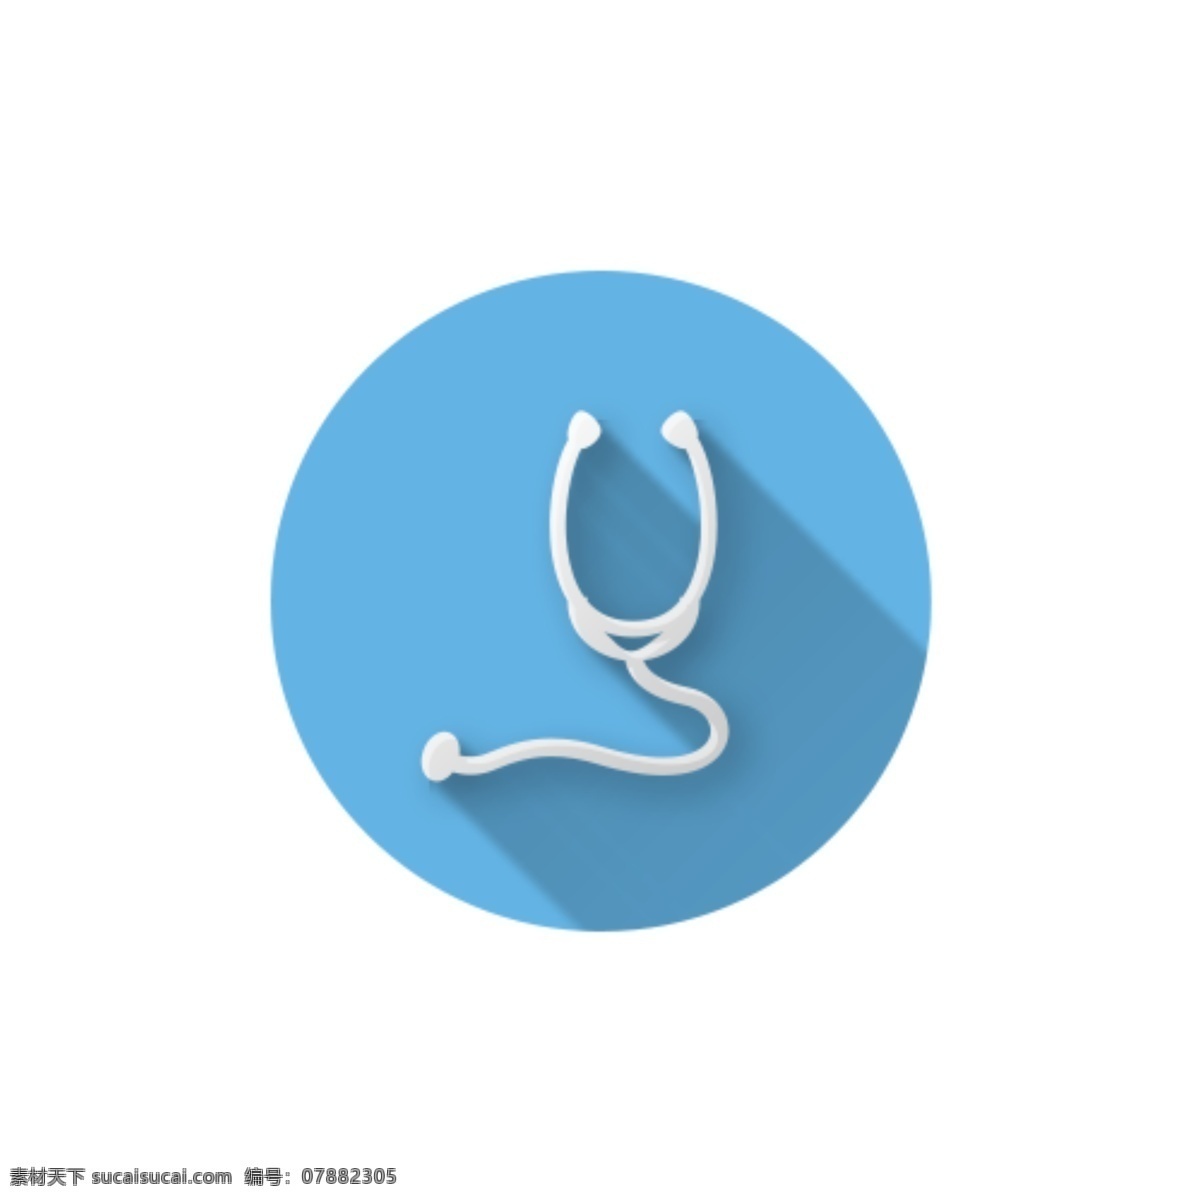 stethoscope 免 扣 听诊器 扁平 图标 医疗设备